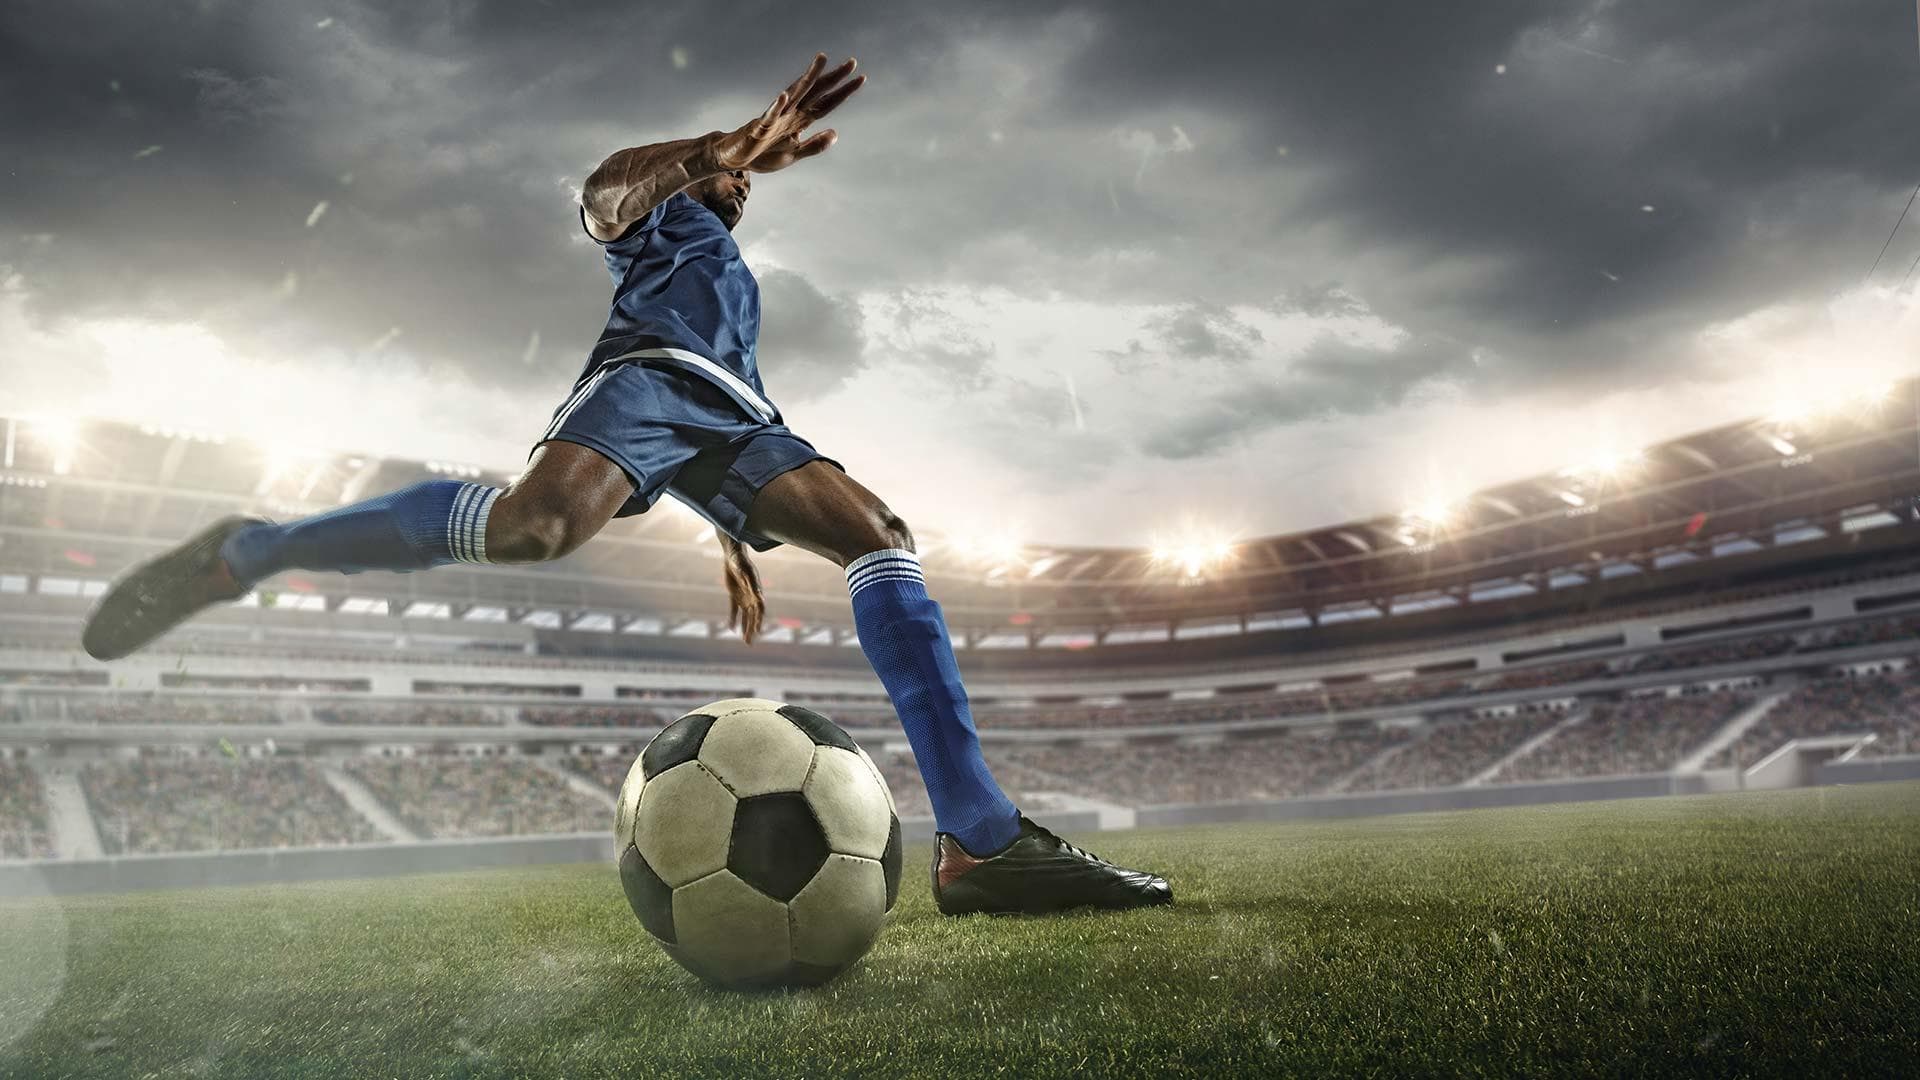 Soccer player kicks ball